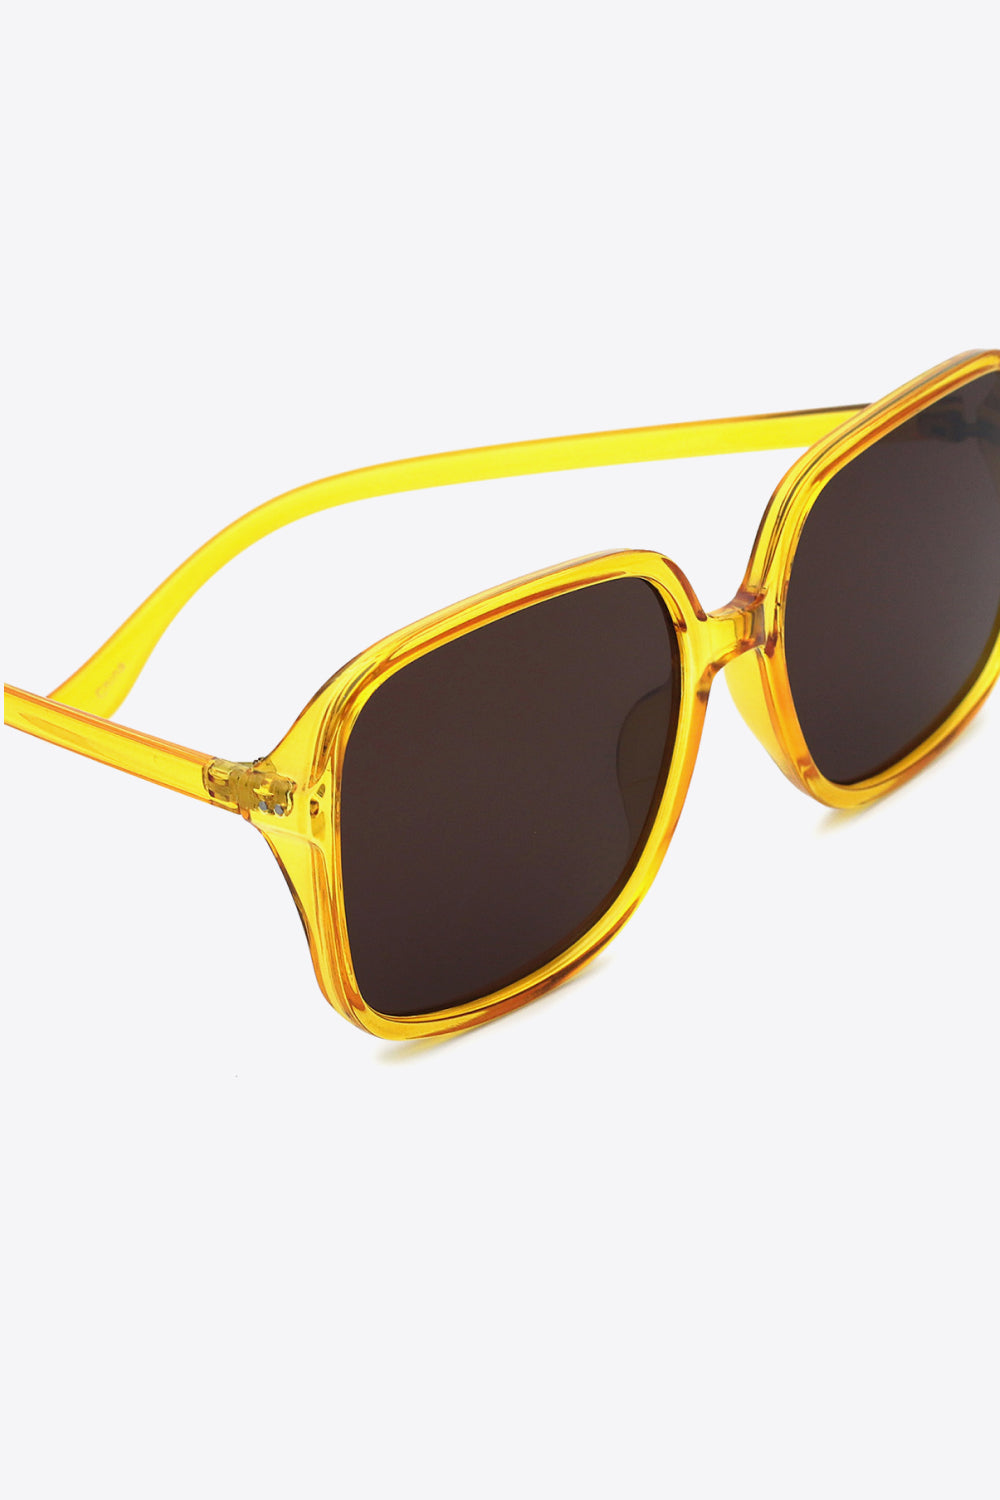 Women’s Polycarbonate Square Sunglasses